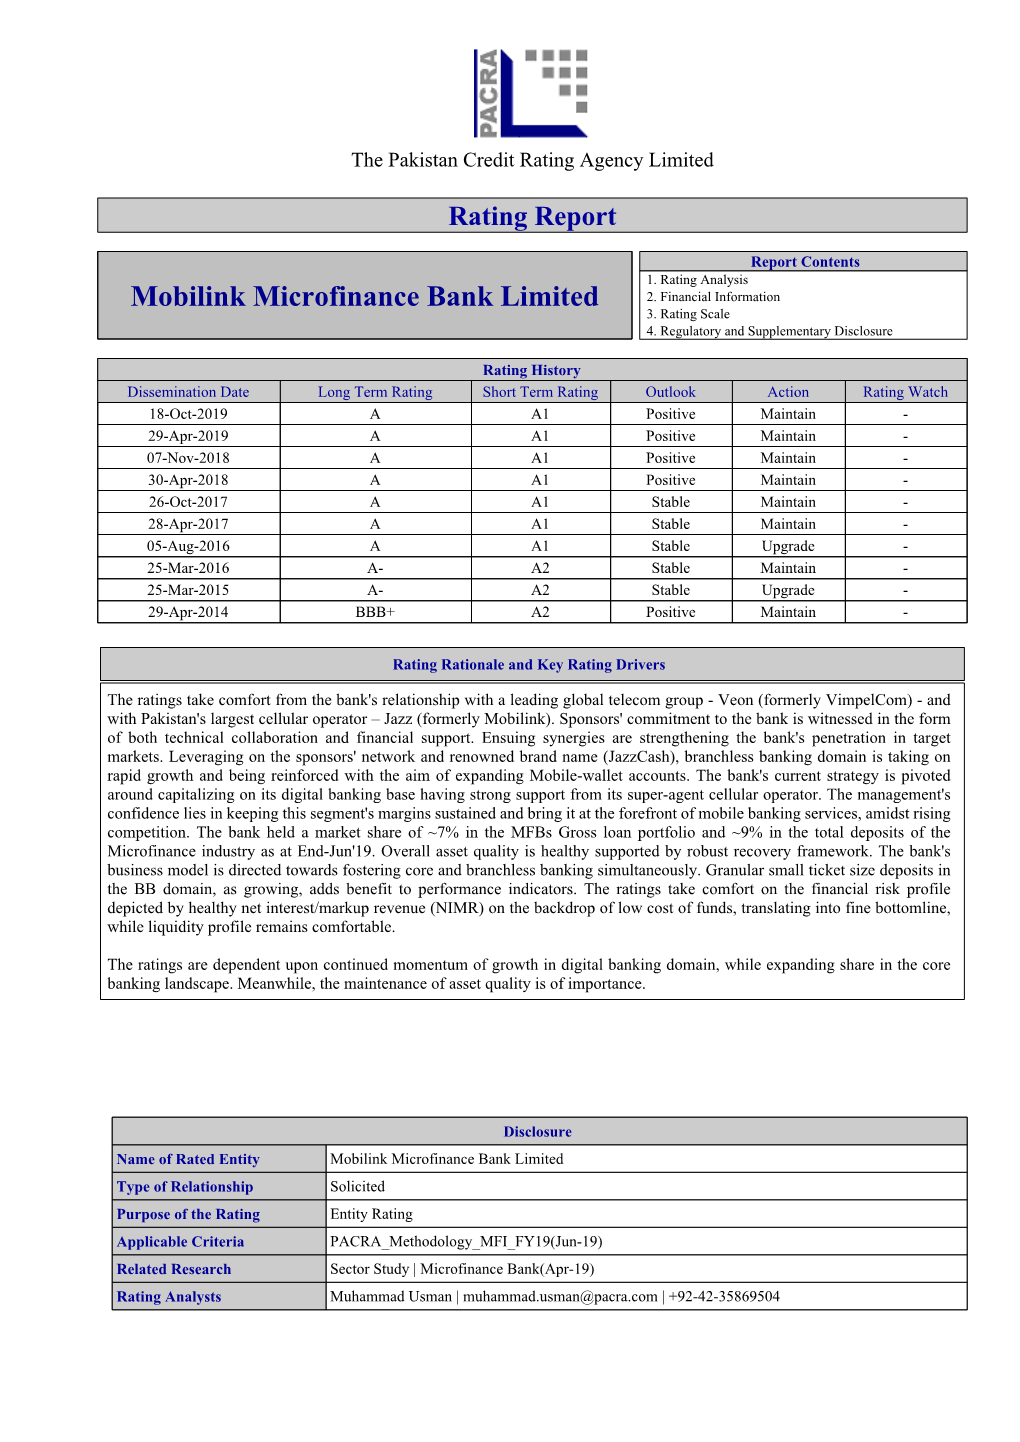 Mobilink Microfinance Bank Limited 2